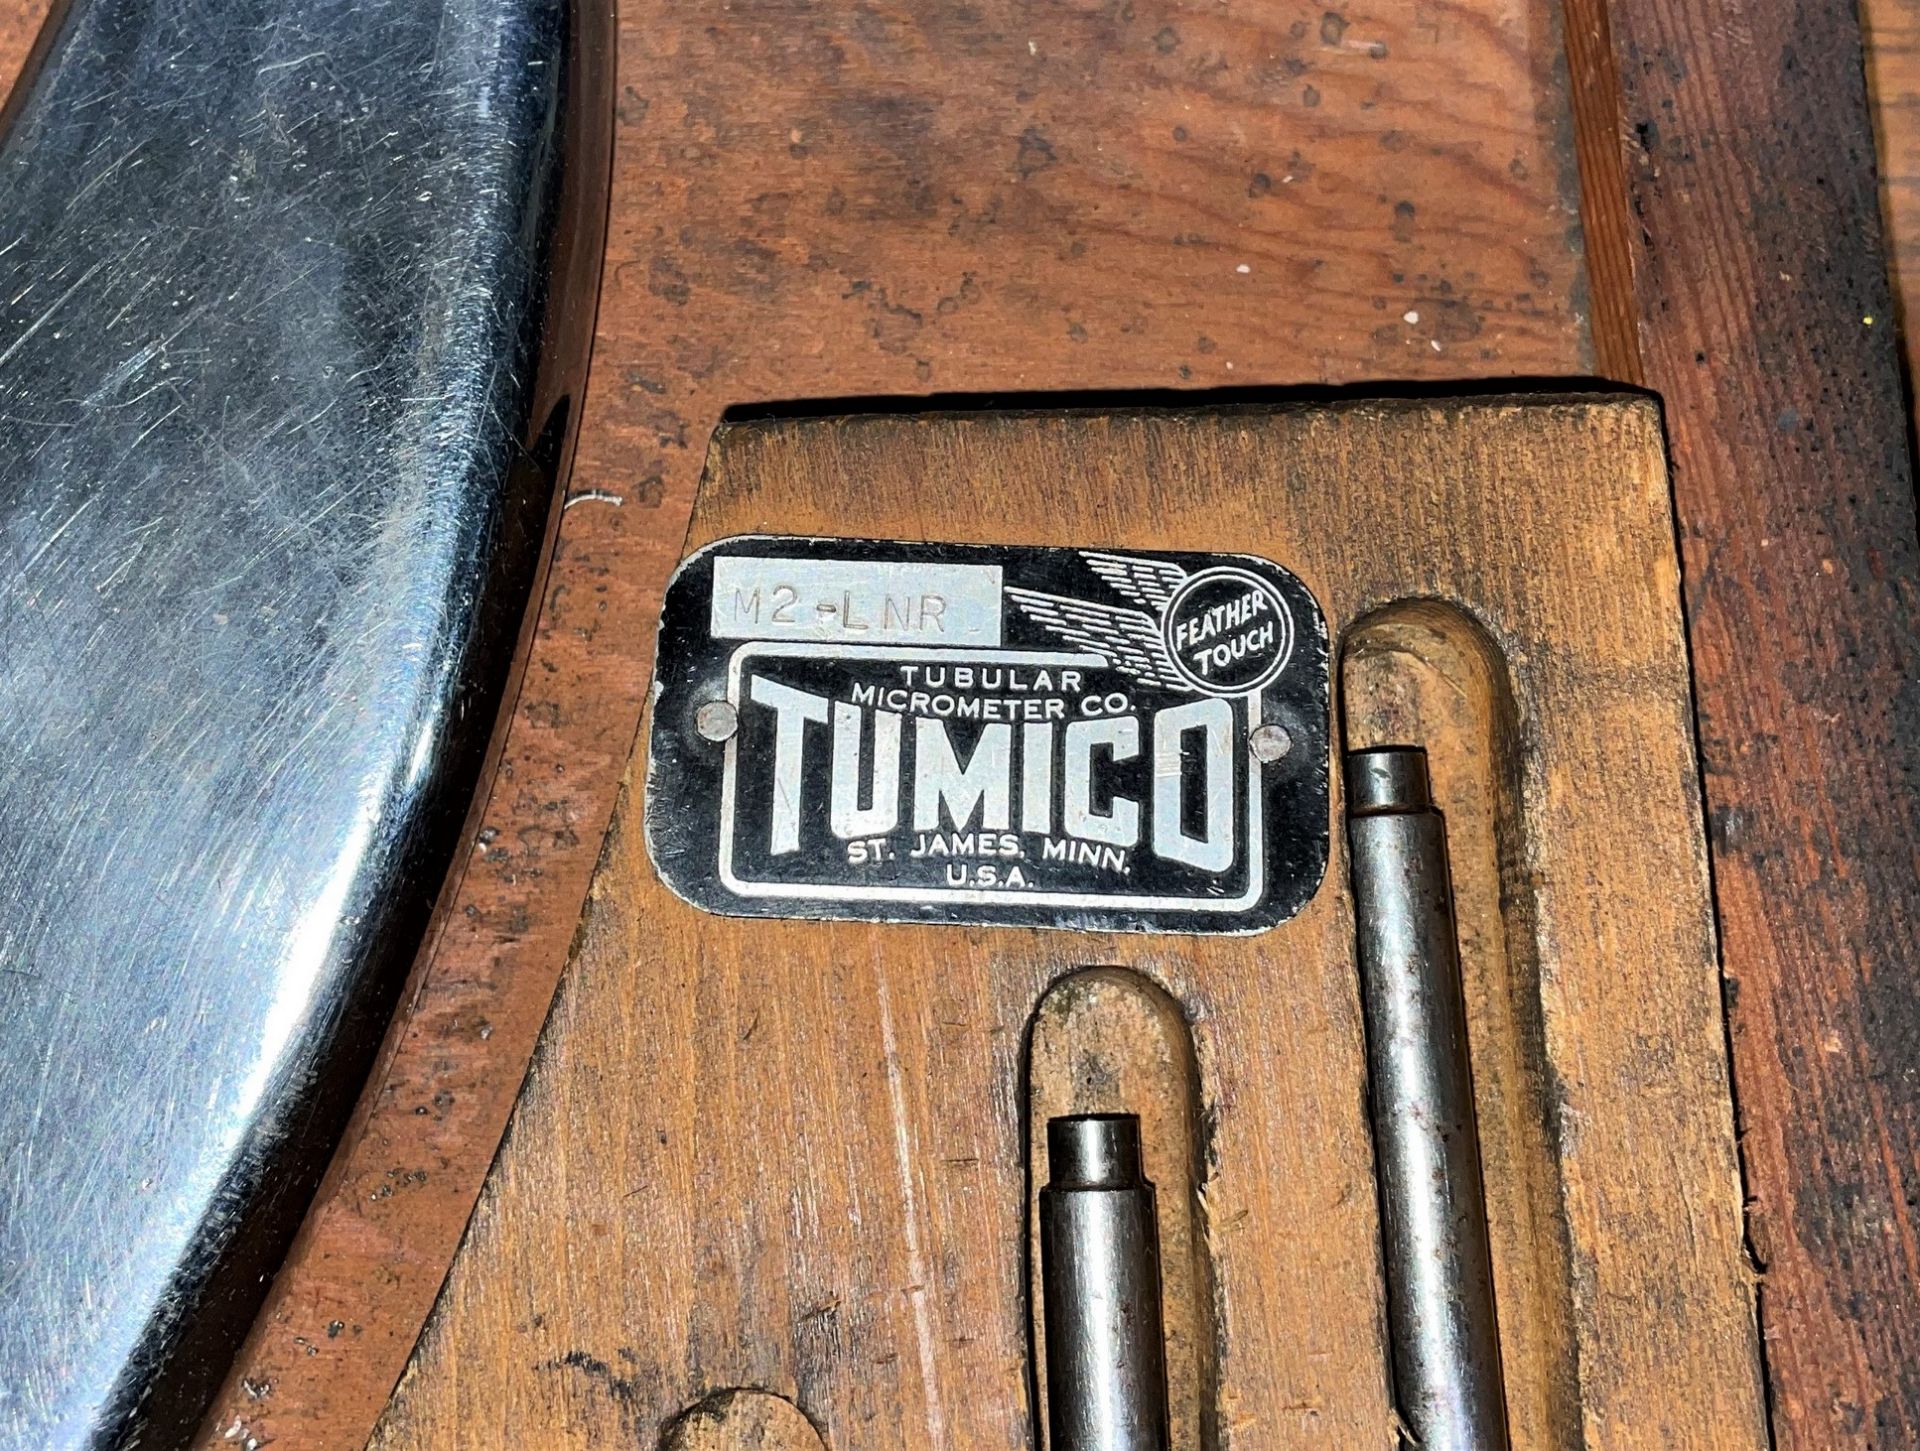 Tumico Mdl. M2-LNR Micrometer 18" - Image 4 of 4